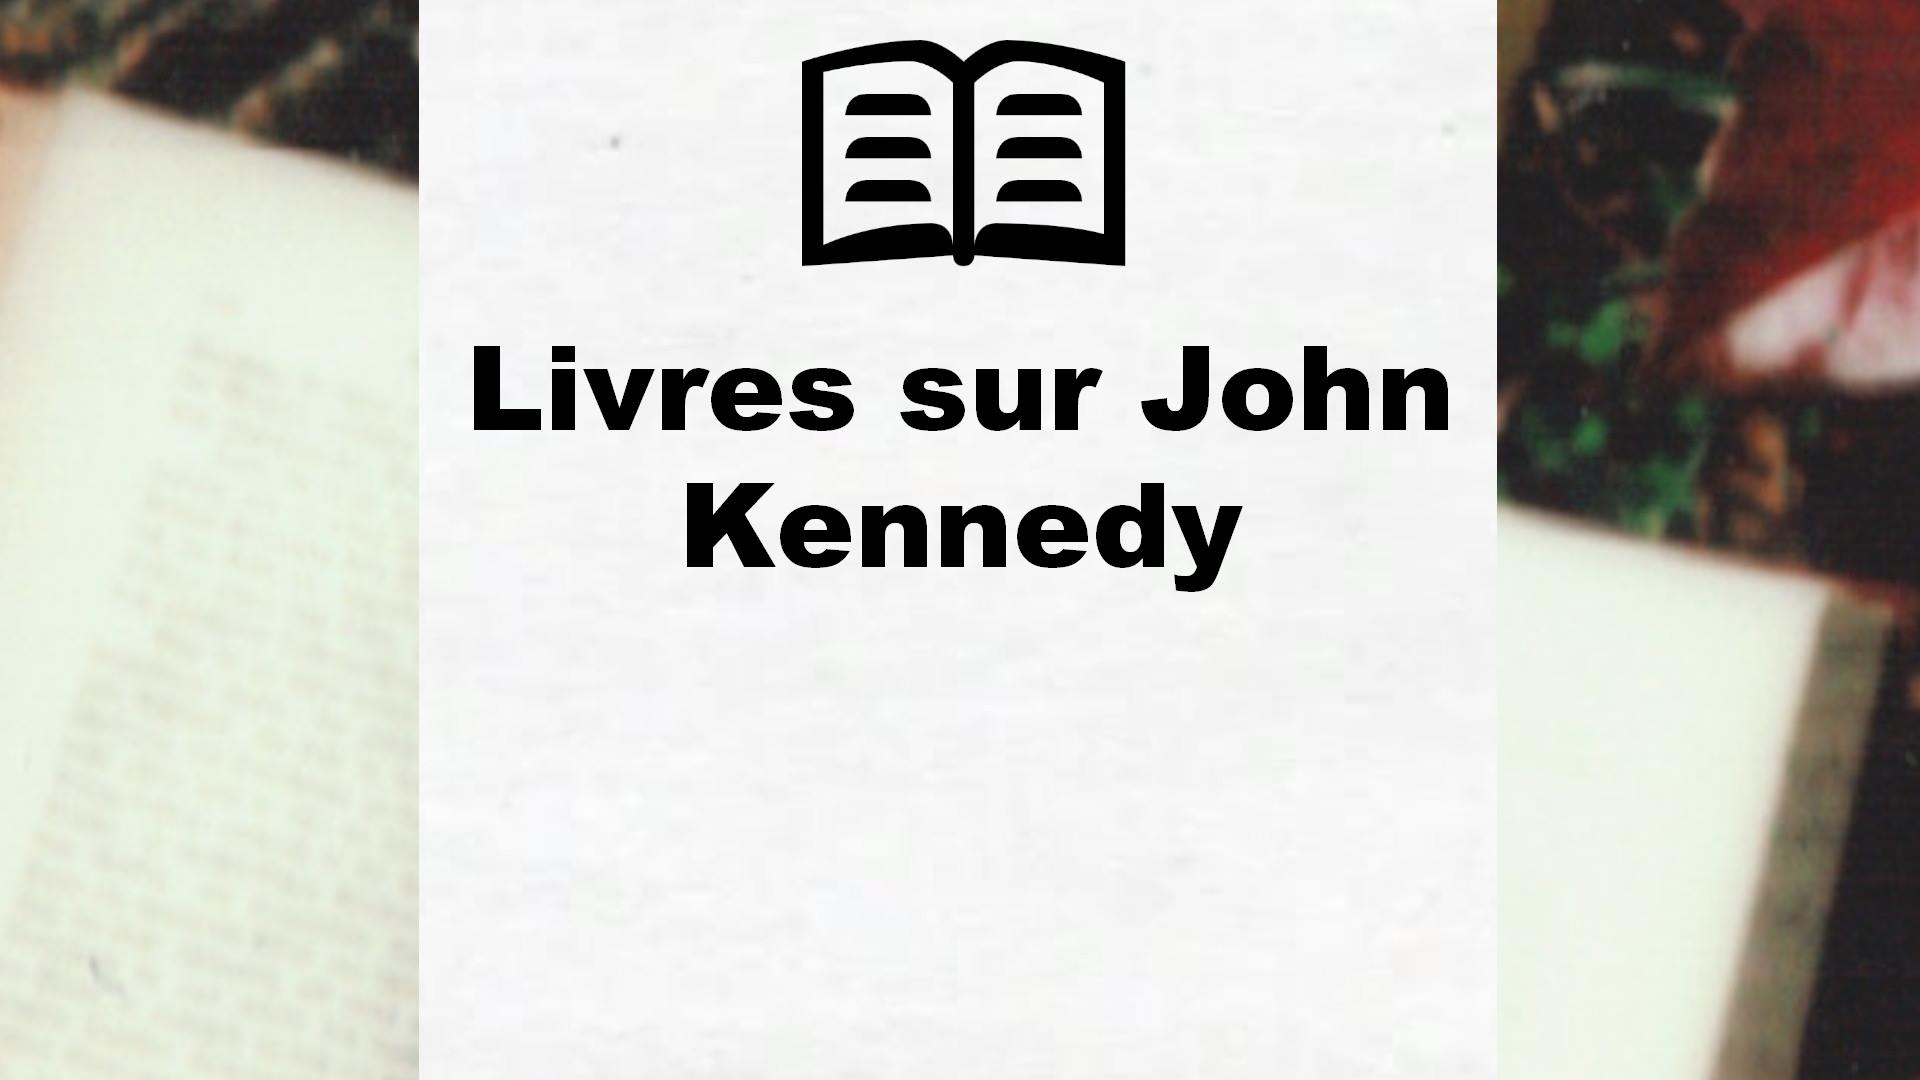 Livres sur John Kennedy